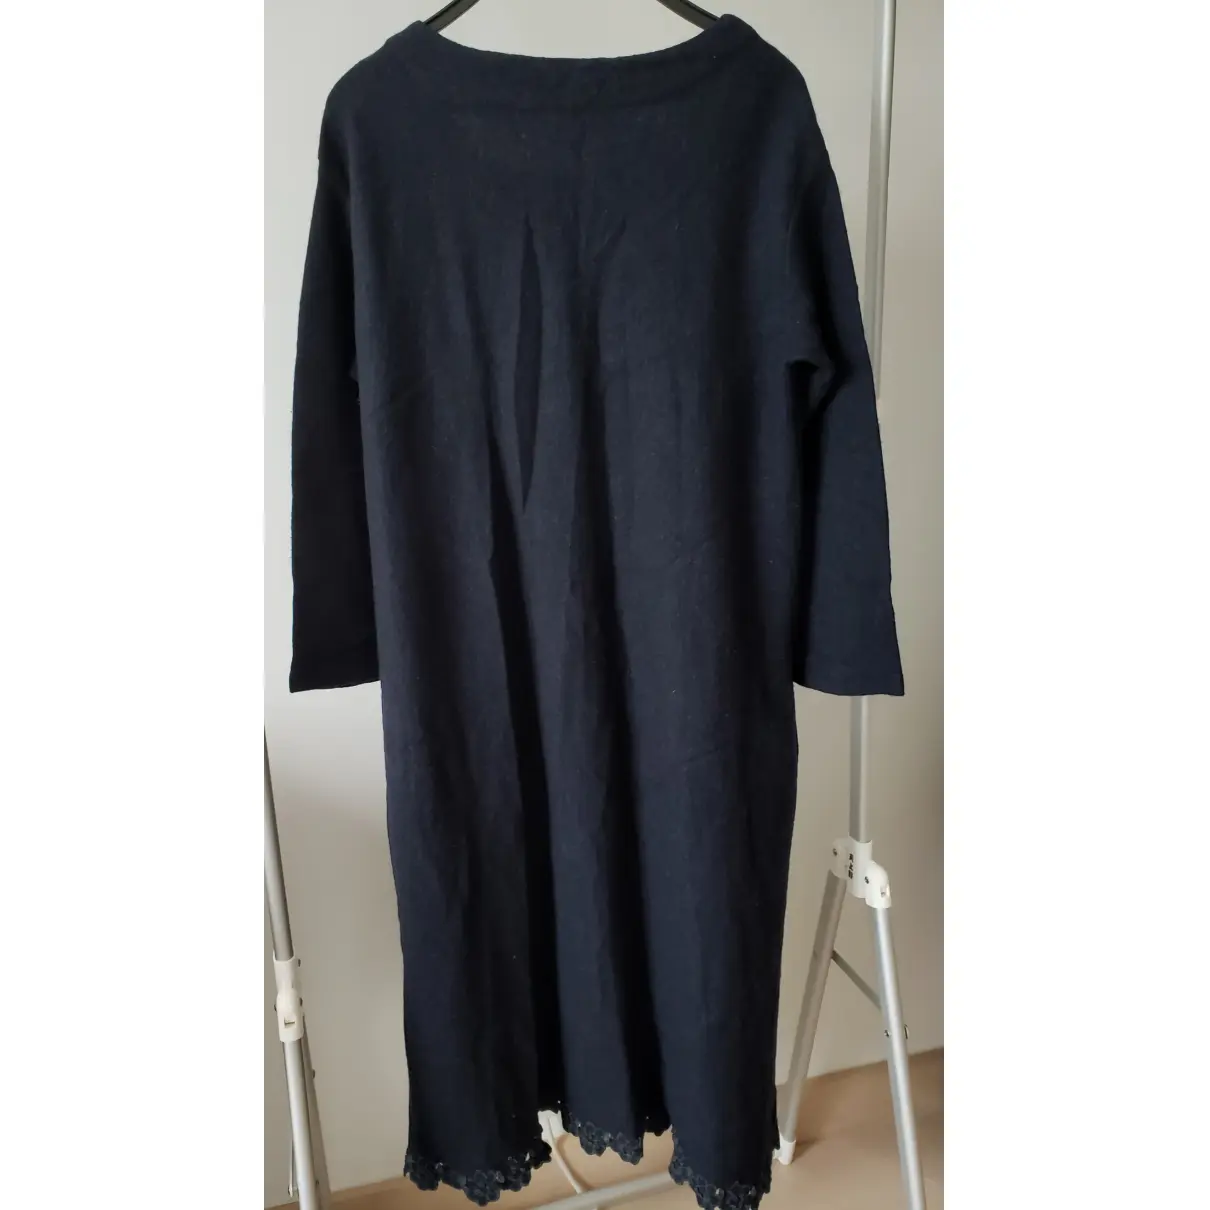 Buy 45RPM Wool mid-length dress online